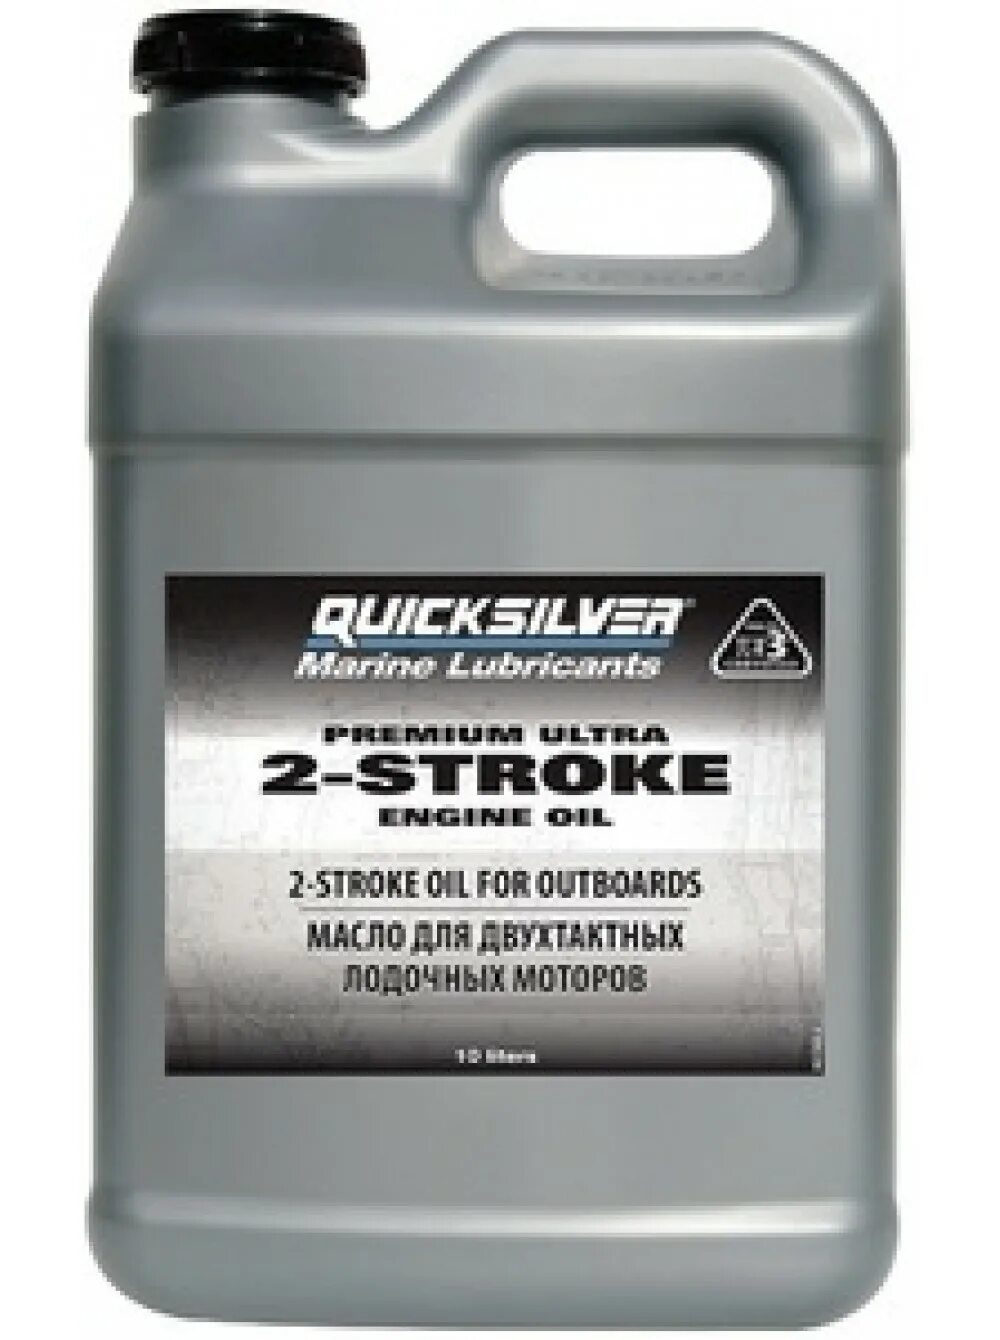 Масло для лодочного мотора 9.8. Масло Quicksilver 2-stroke. Quicksilver масло для лодочных моторов 2 тактных. Масло для 2-тактных моторов Quicksilver Premium Ultra TC-w3. Quicksilver Premium Ultra 2-stroke.